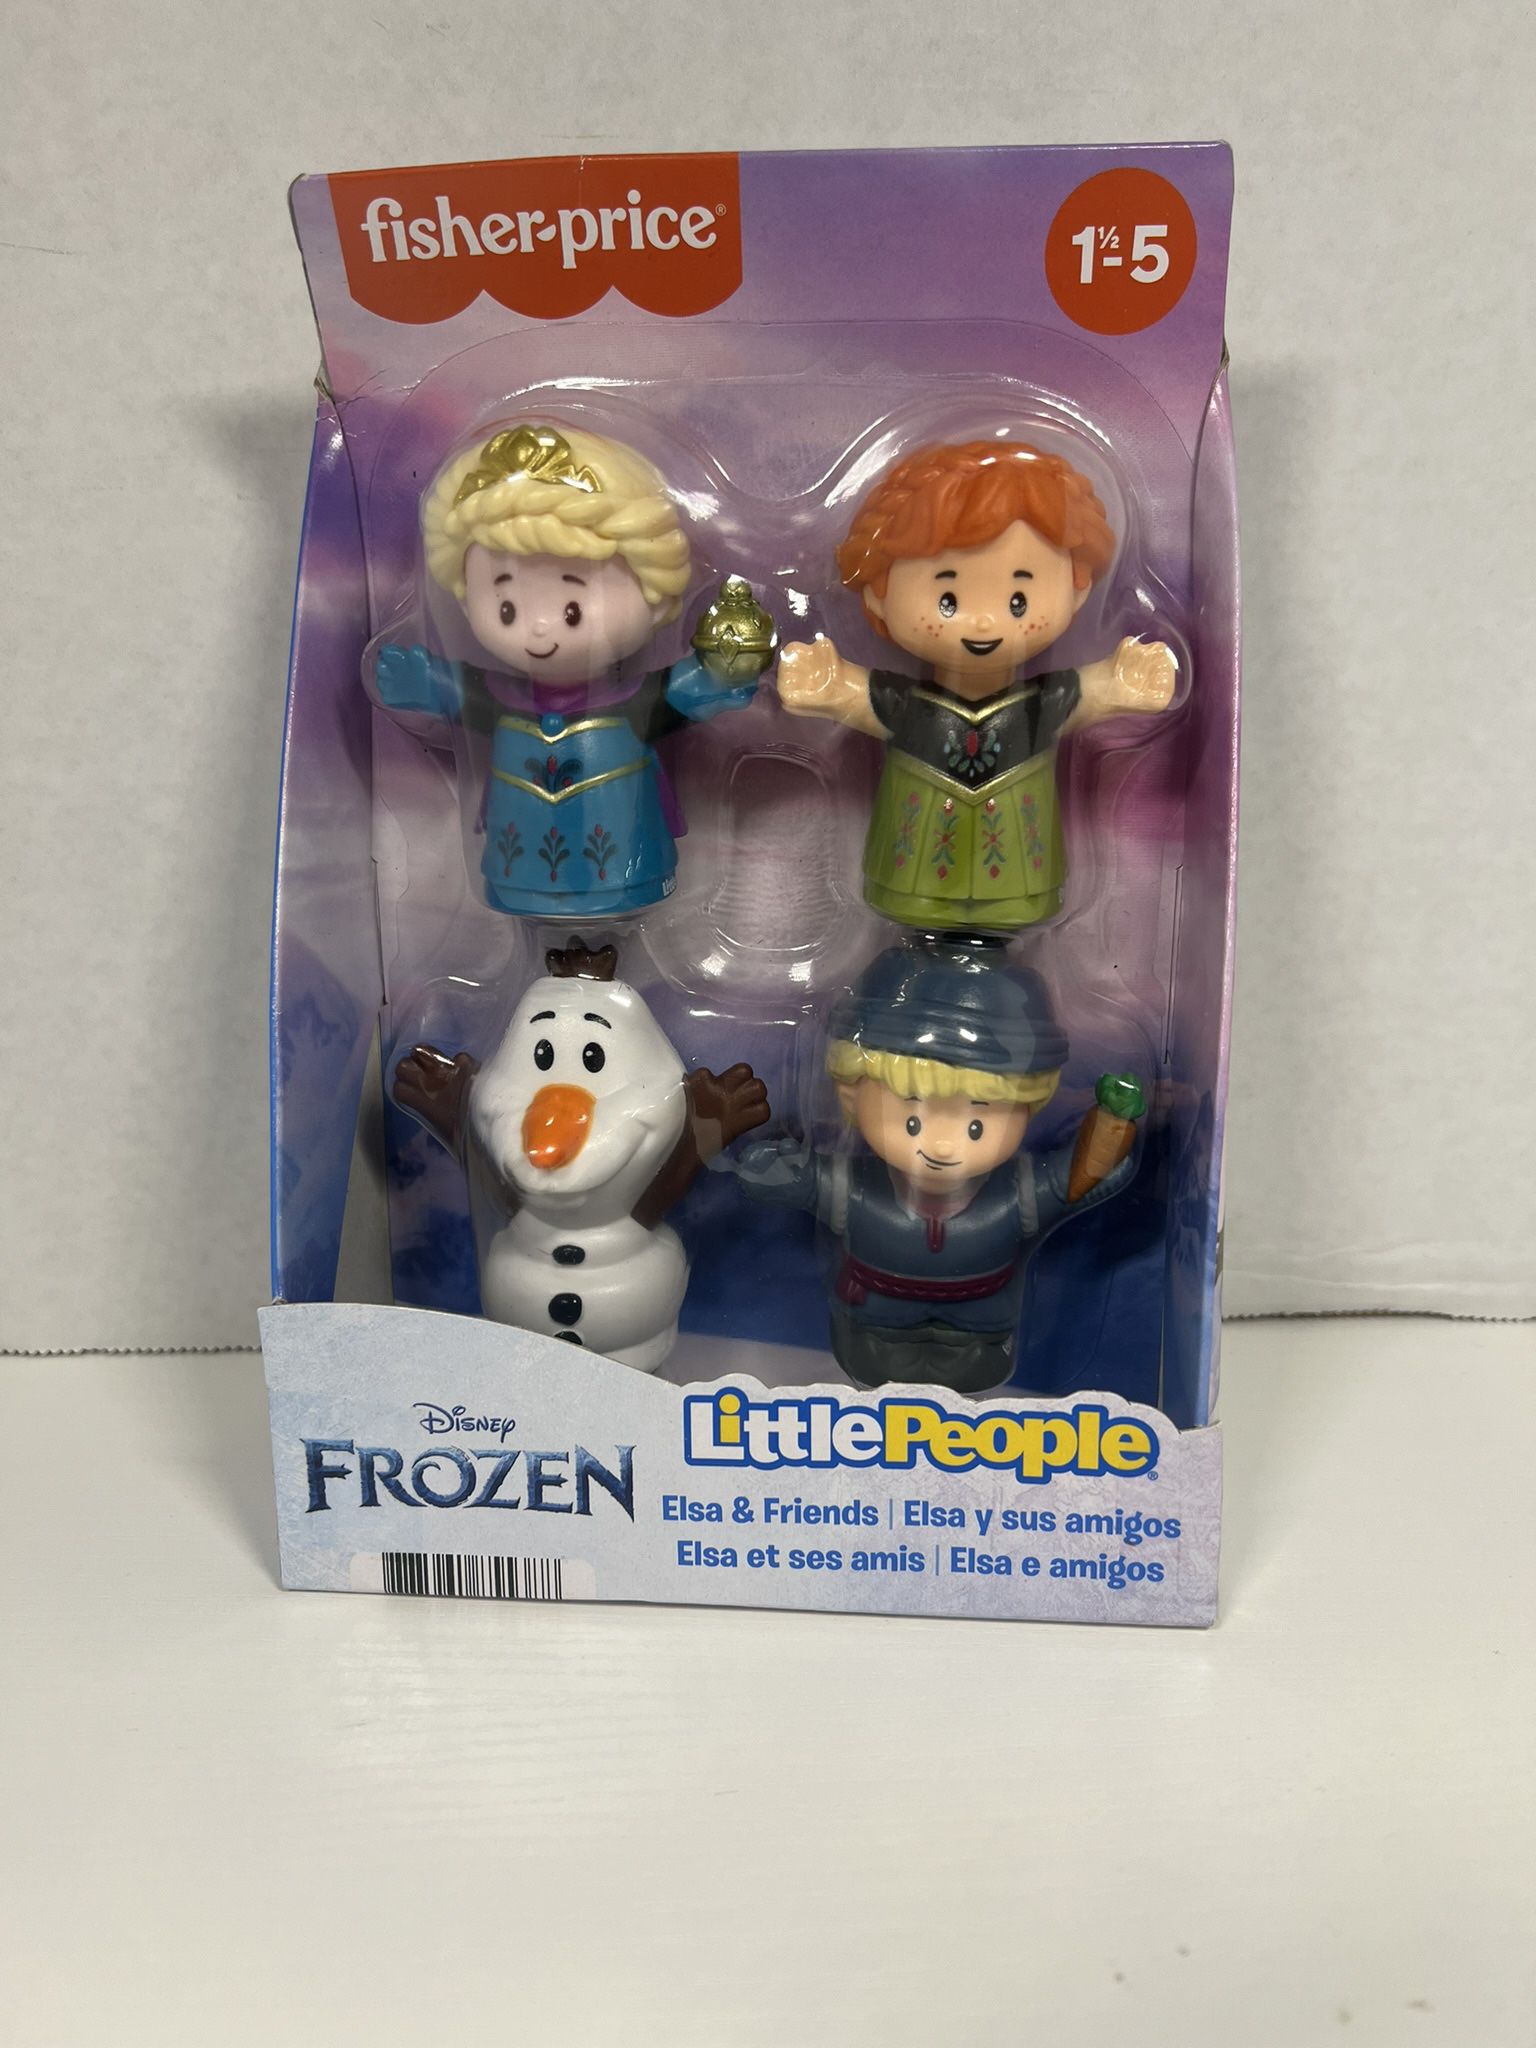 Fisher-Price Disney's Frozen Little People